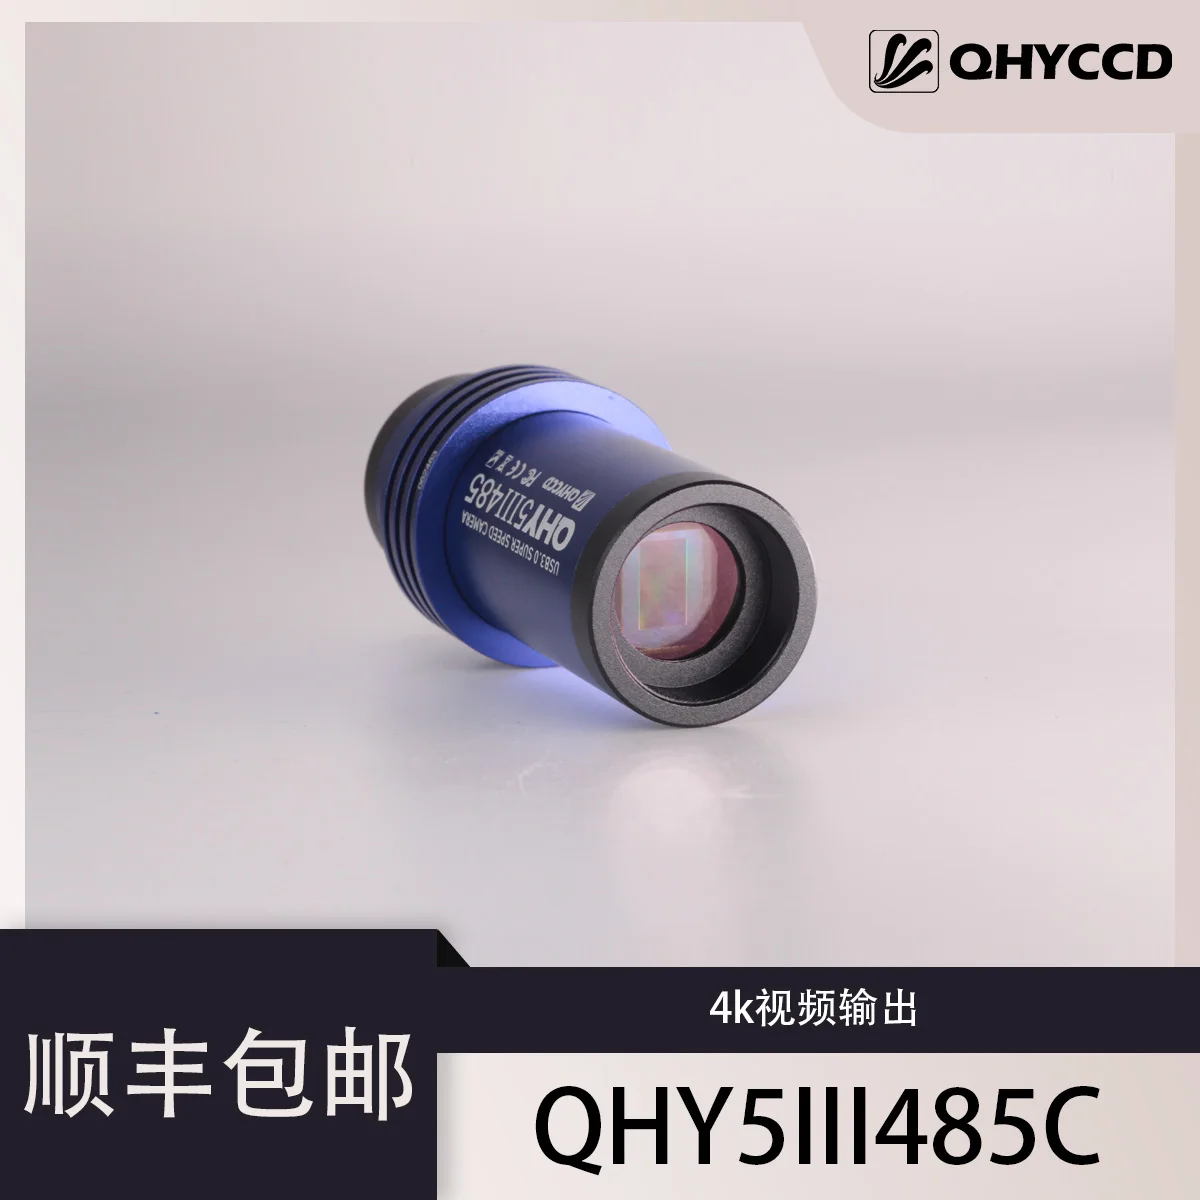 

[Qhyccd] Qhy5iii485c плоская астрономическая камера 4K разрешение Sony485 Terug Verlichte 1/1.2"